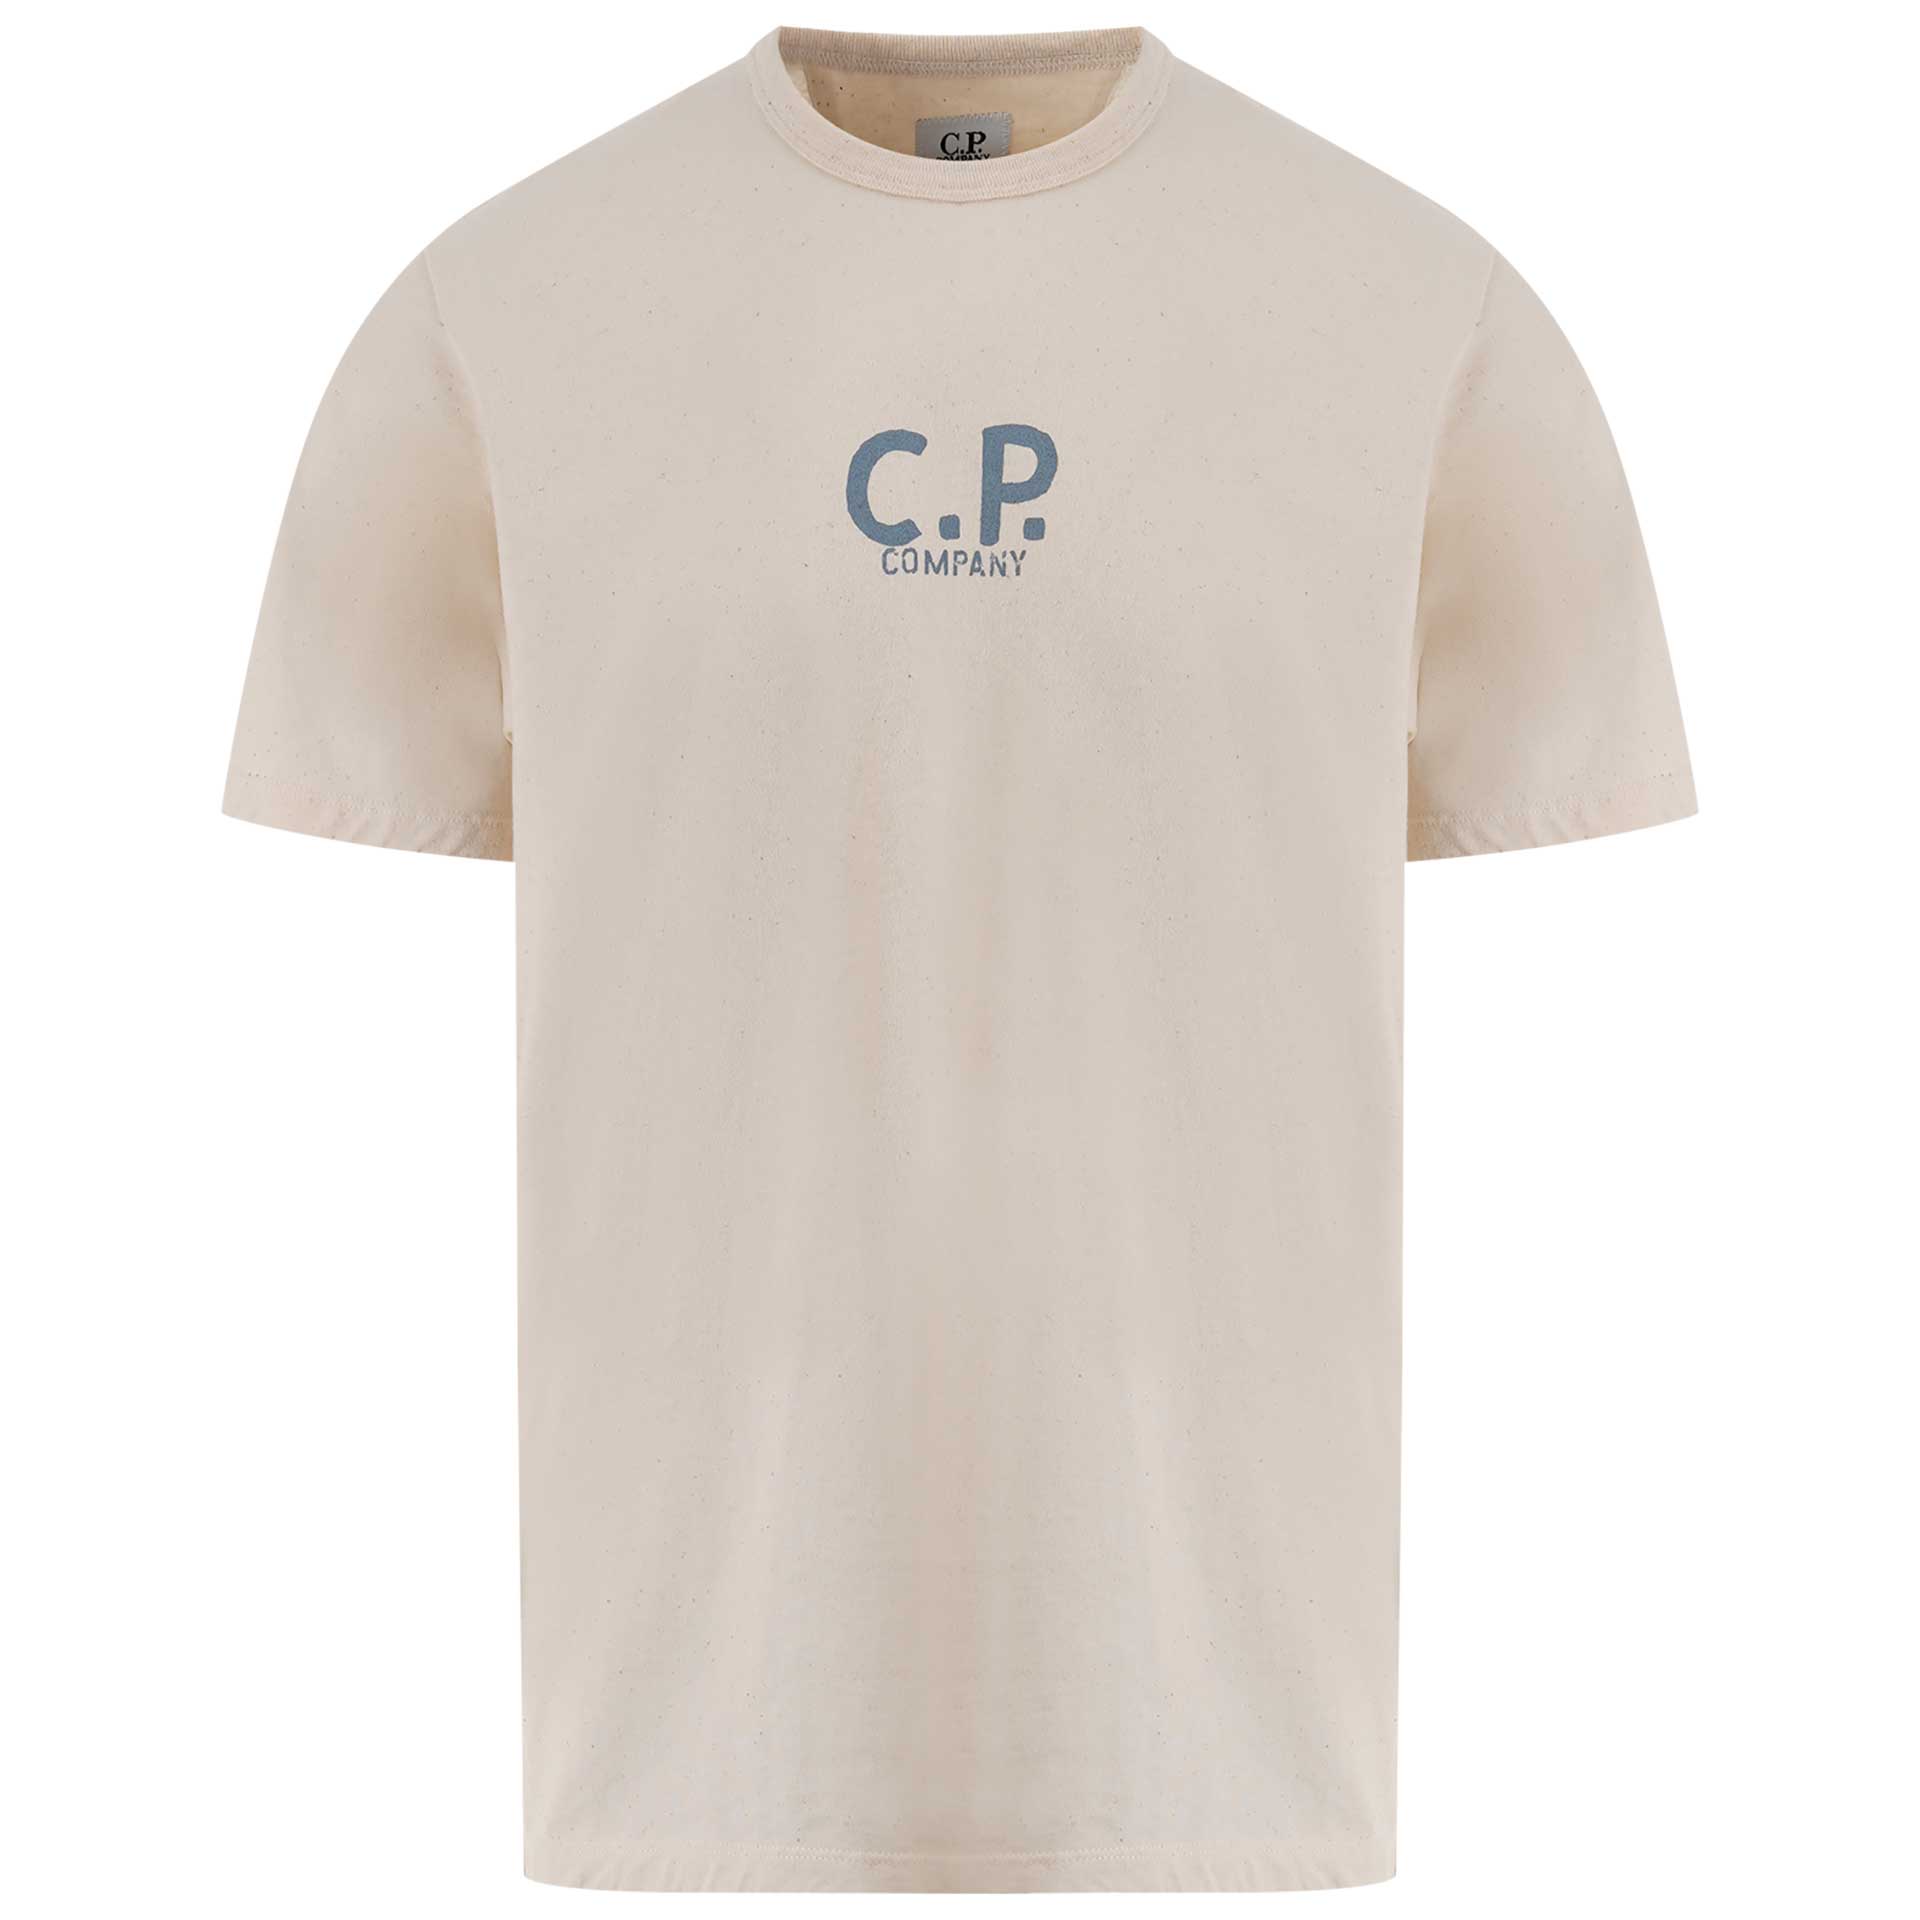 CP Company T-shirt 1